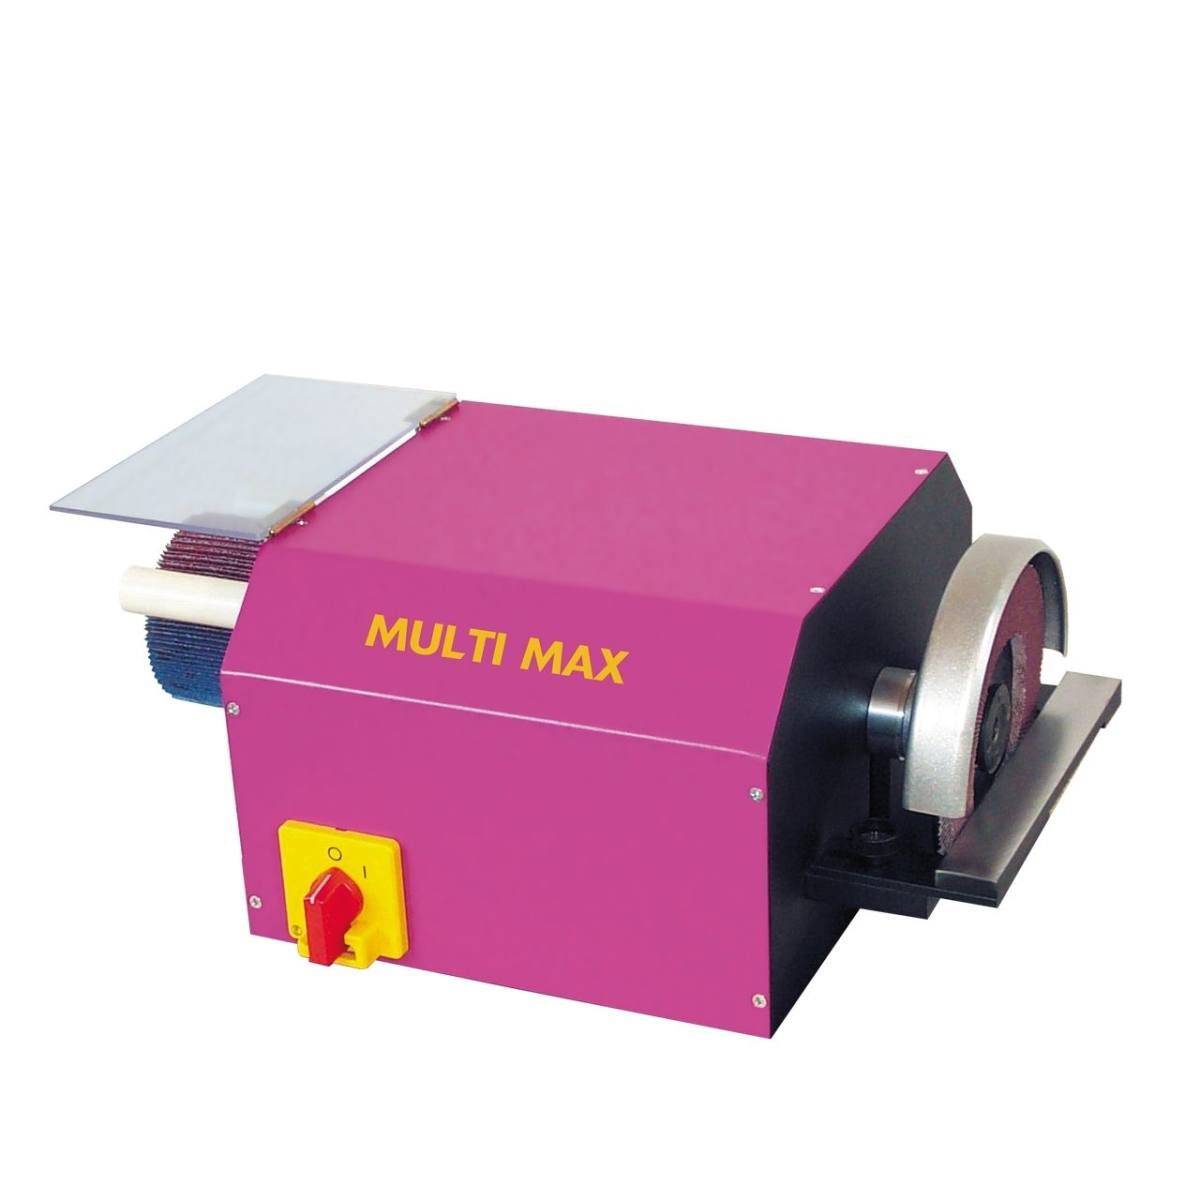 MULTI MAX Grundgerät (3-Phasen), 750 Watt, 380 Volt, 50 Hz